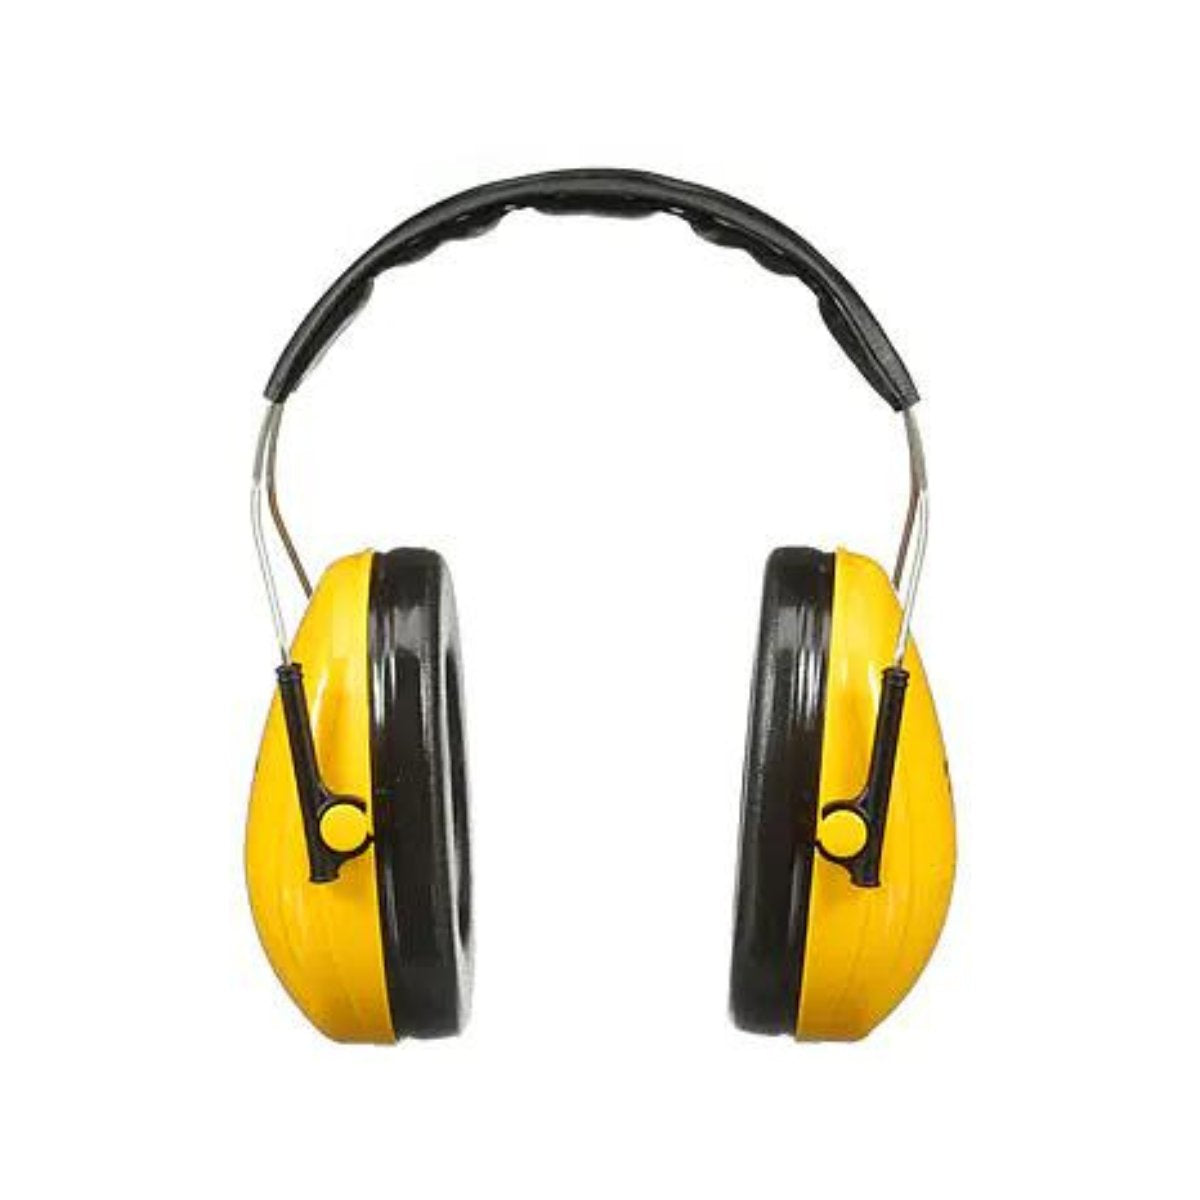 3M™ PELTOR™ Optime™ I Headband Format Earmuff, 28dB (Class 5) H510A (Each)